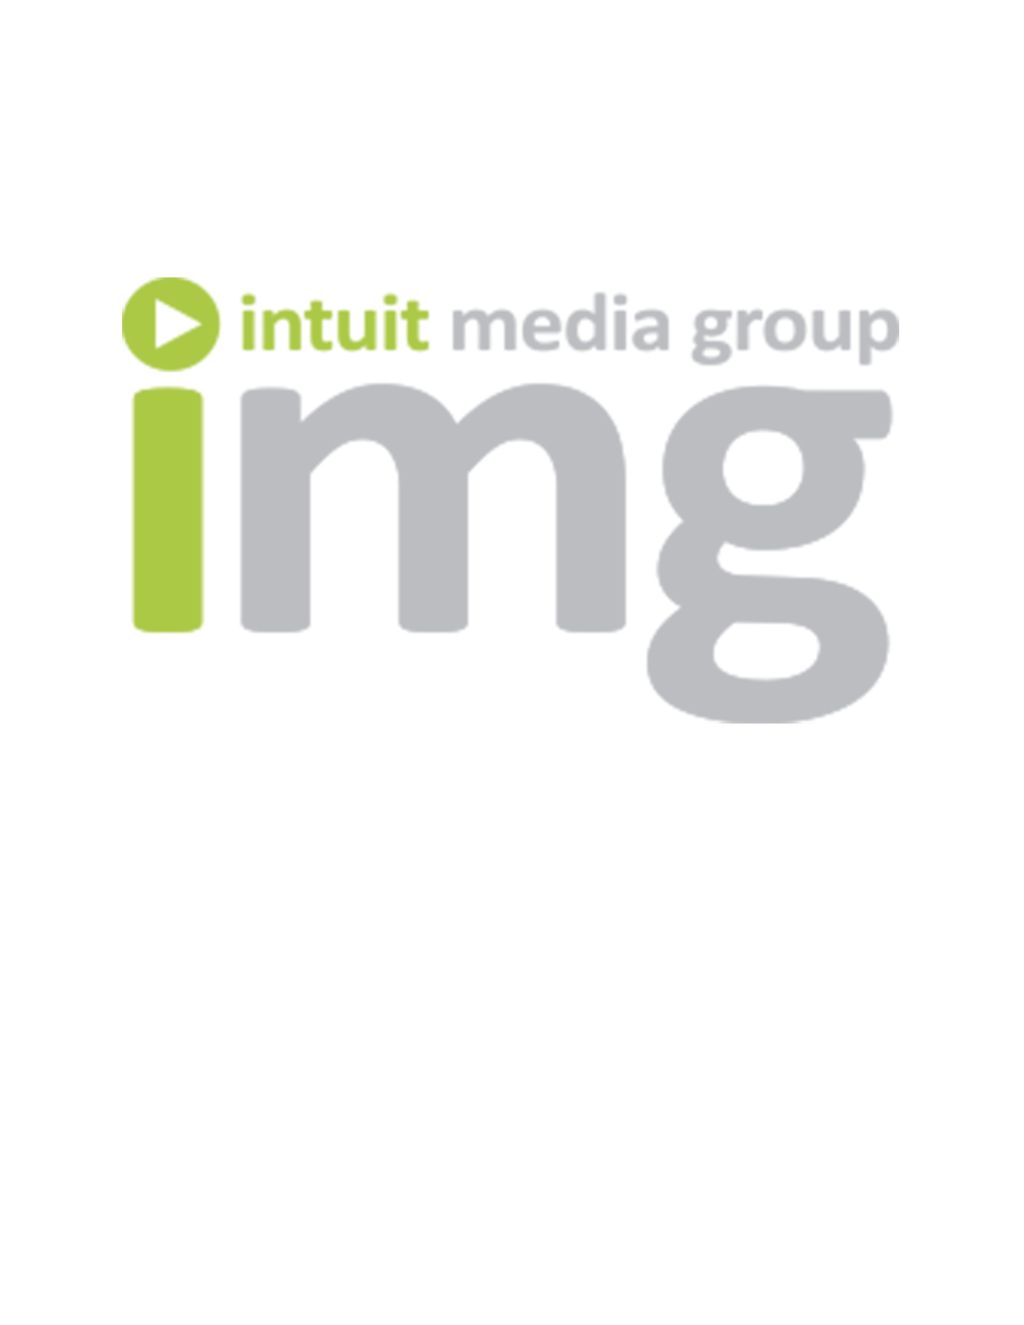 Intuit Media Group